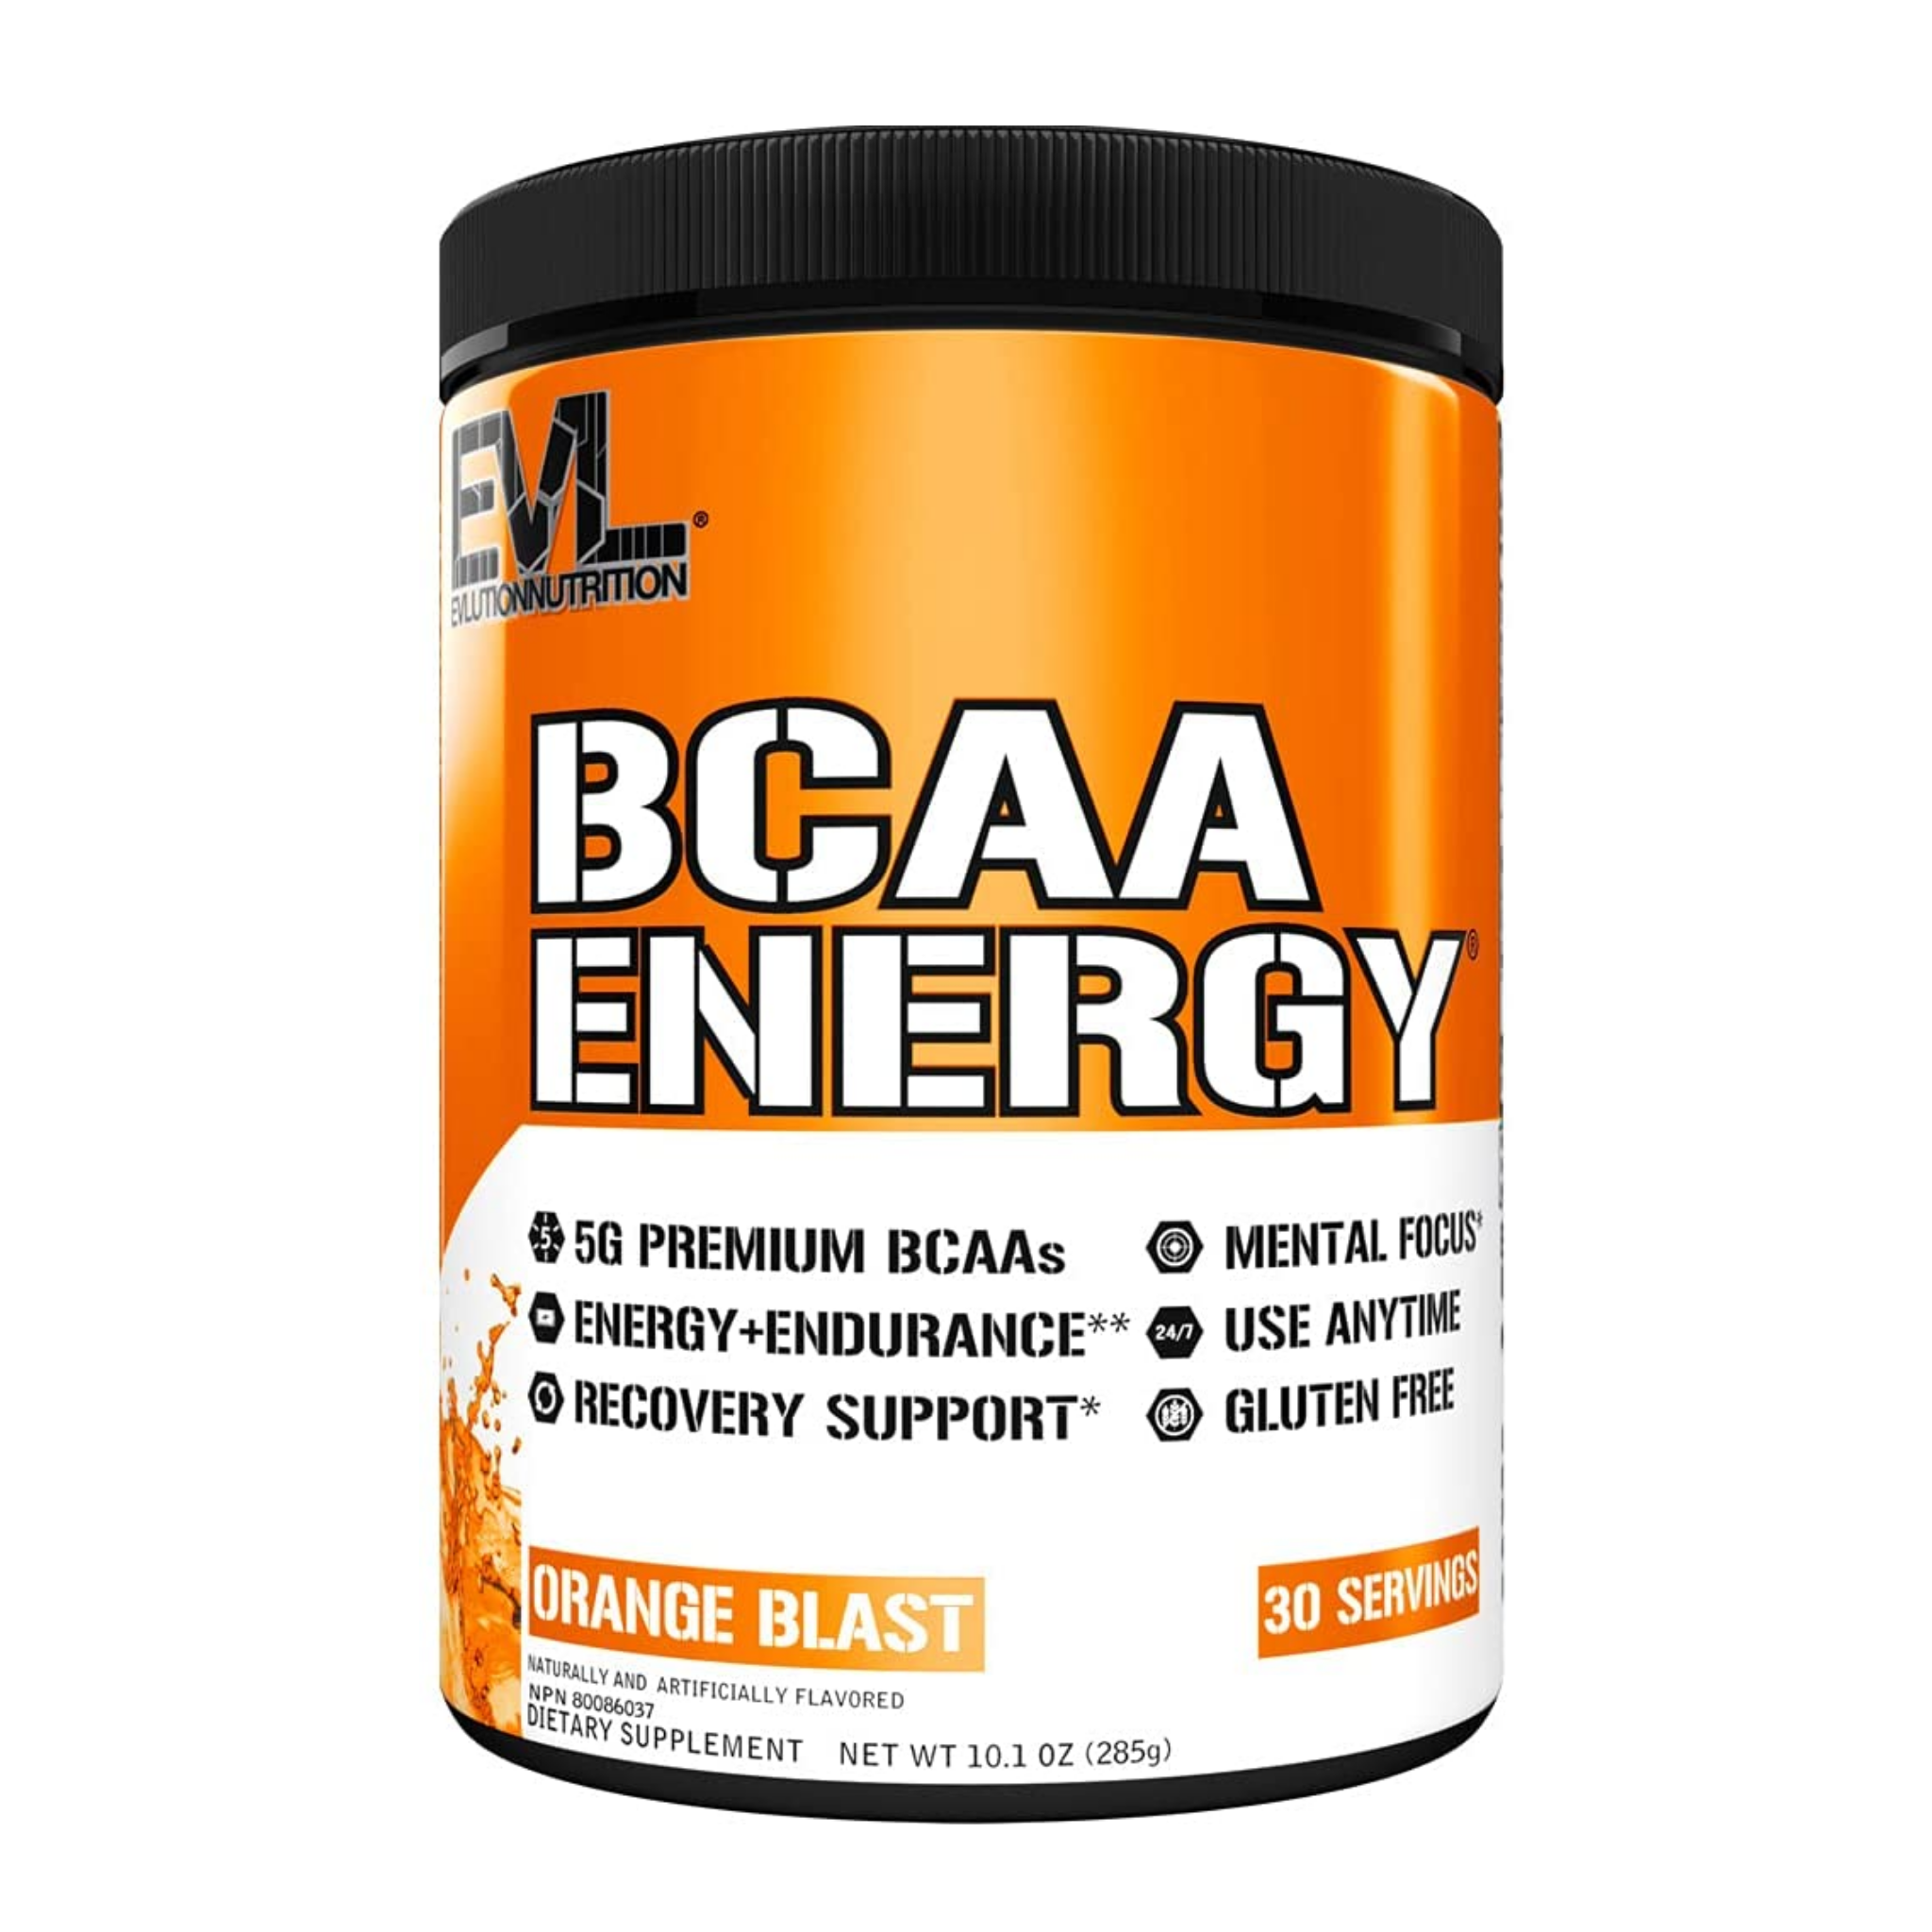 Evlution Nutrition BCAA Energy